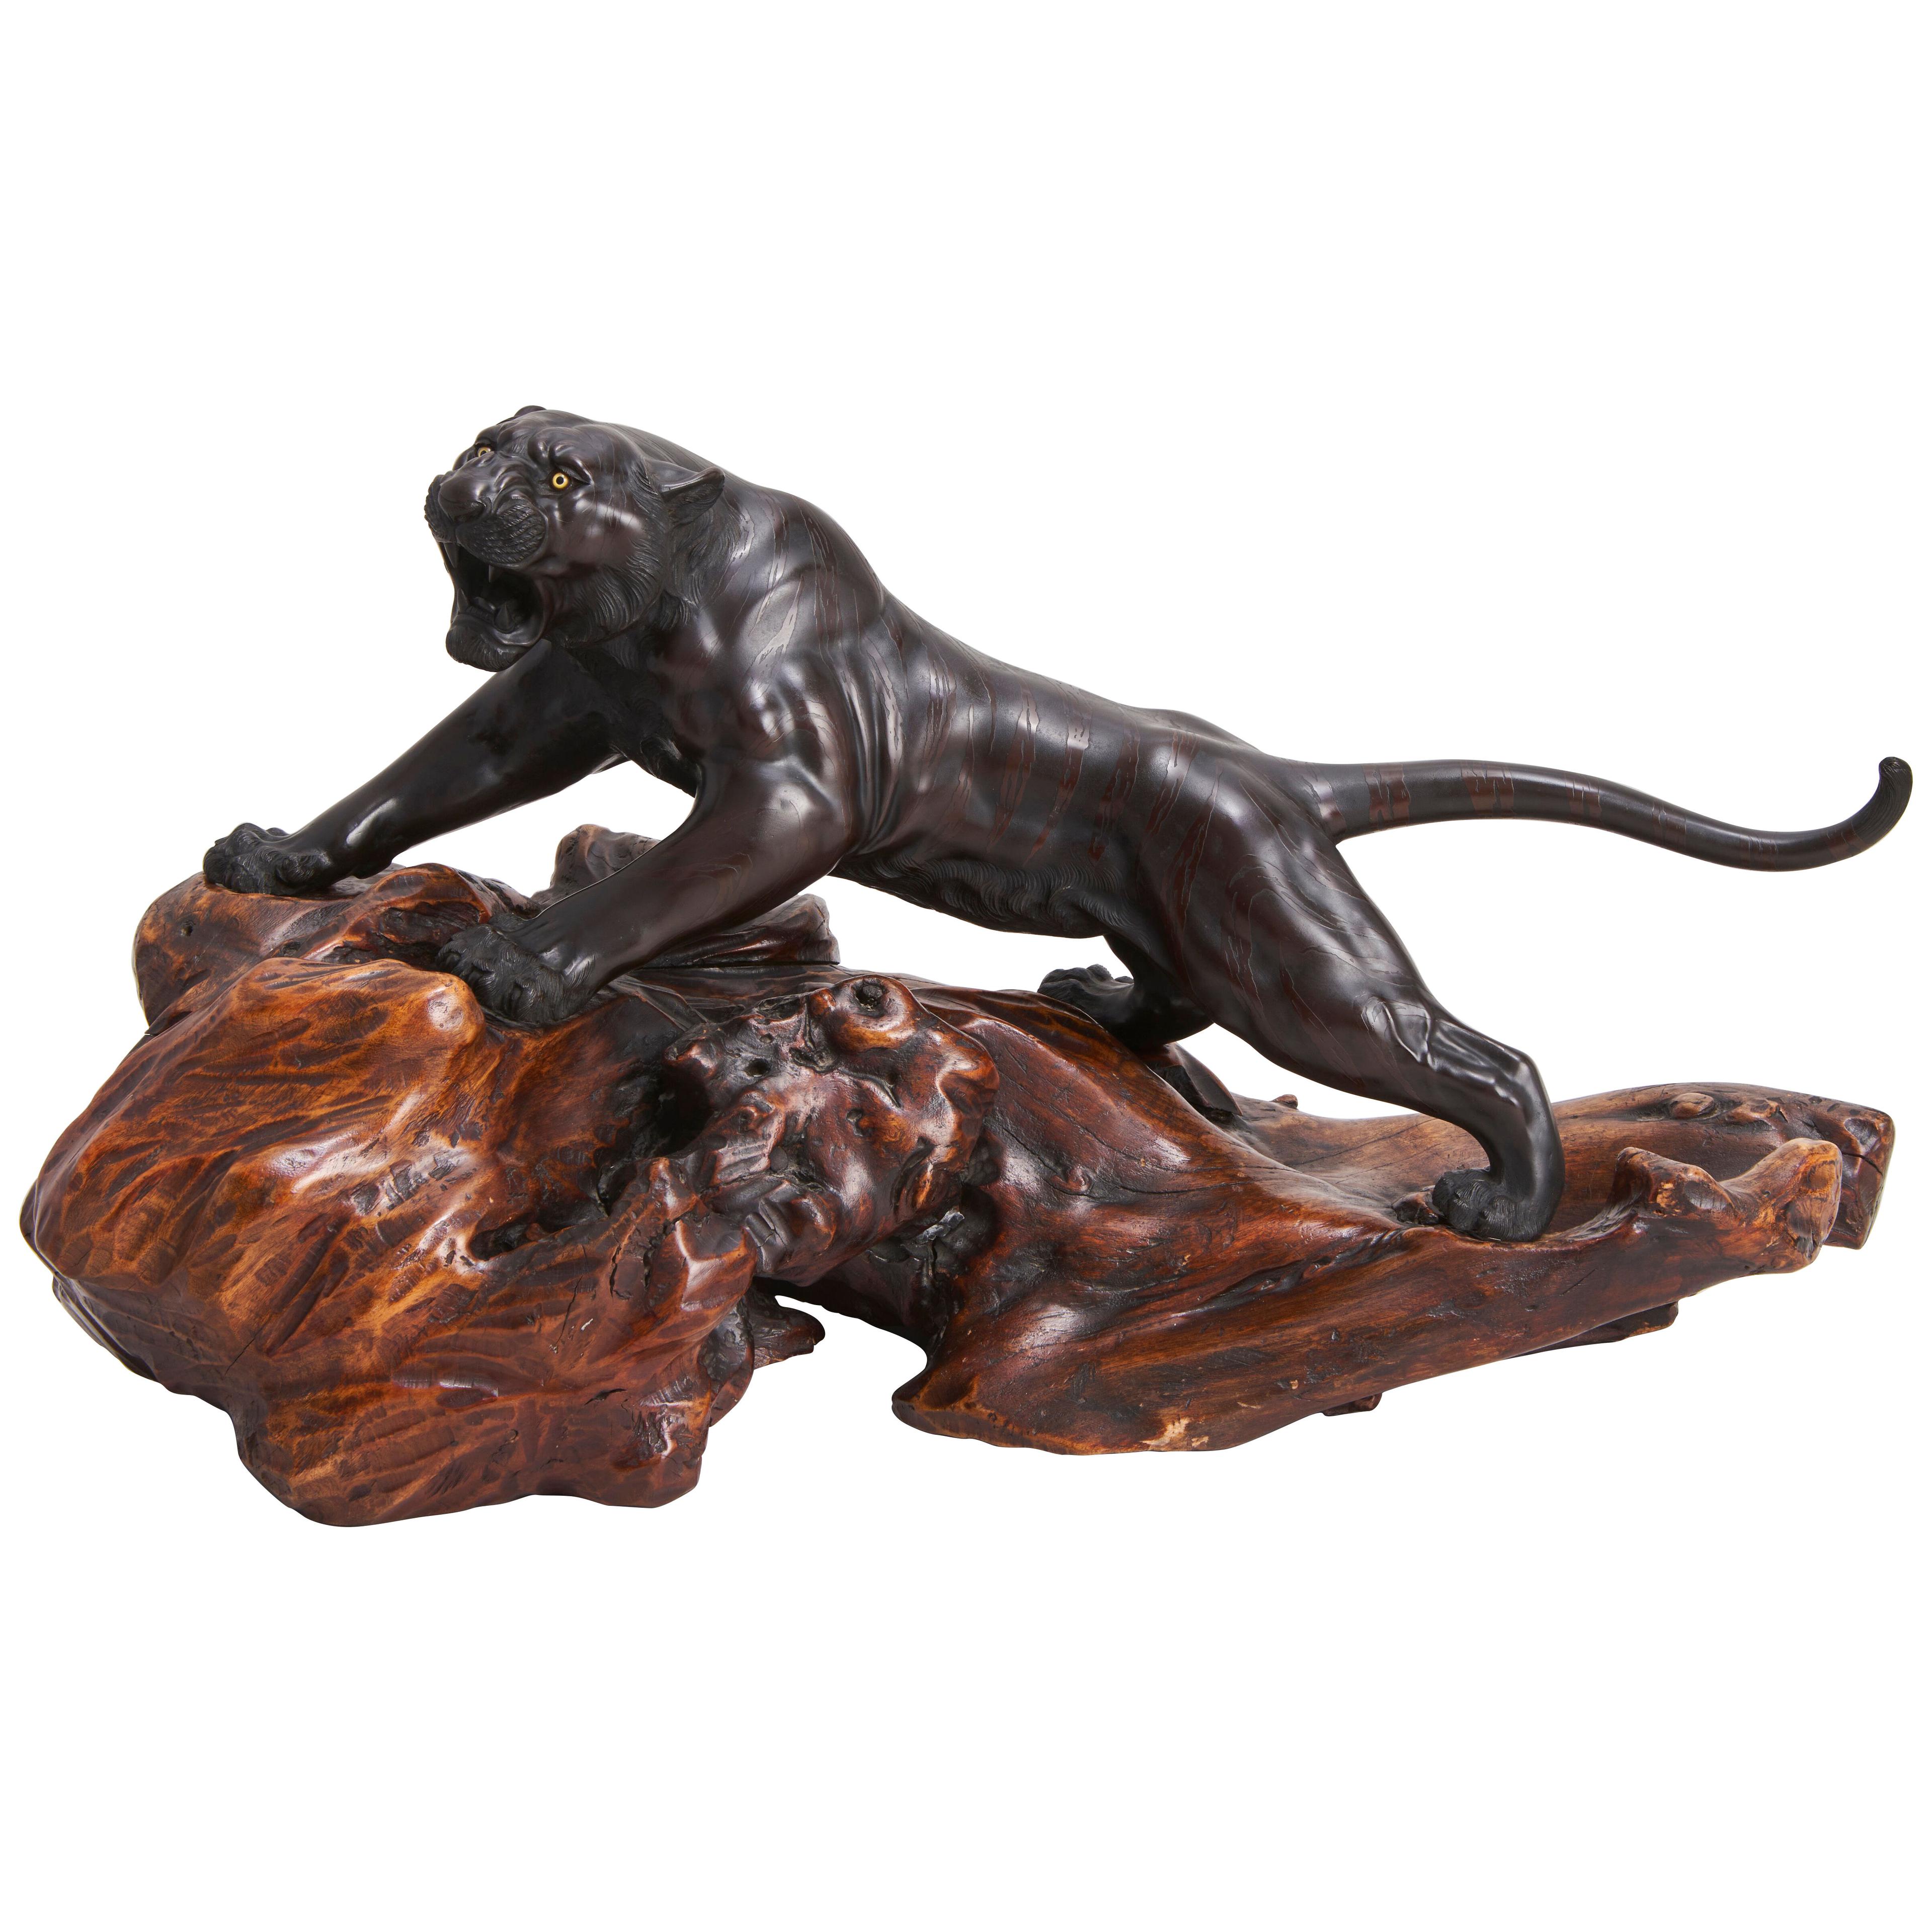 A dramatic large Bronze Okimono of a prowling Tiger on a hard wood base